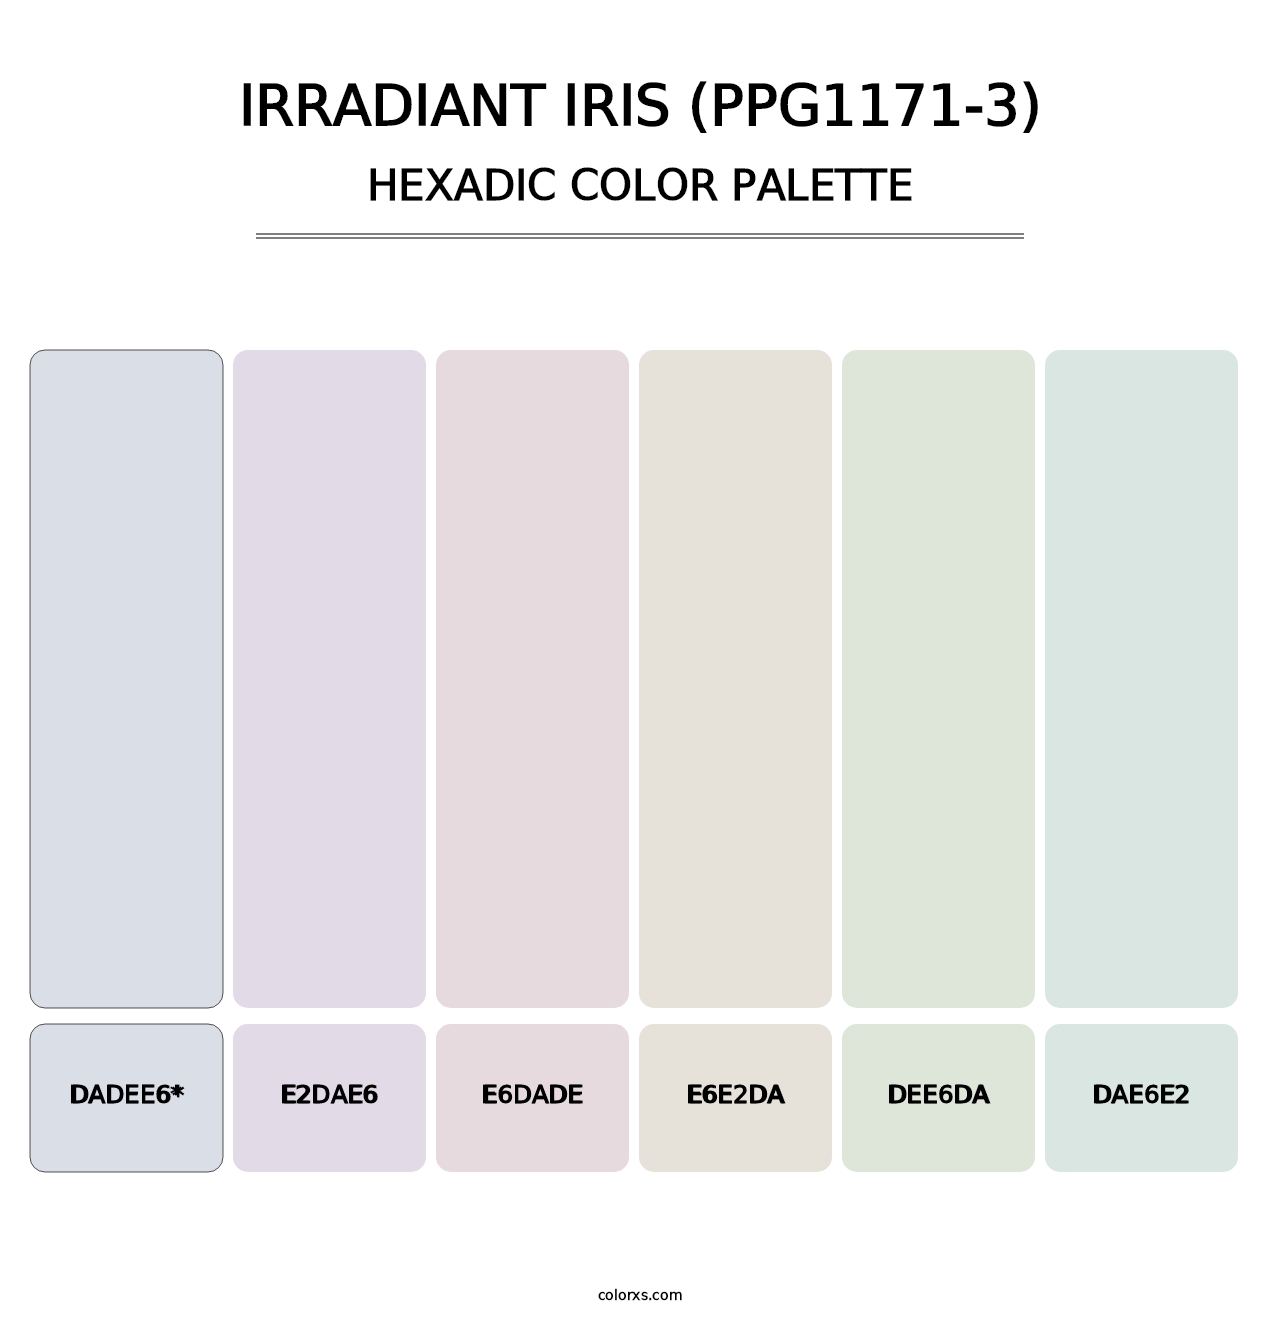 Irradiant Iris (PPG1171-3) - Hexadic Color Palette